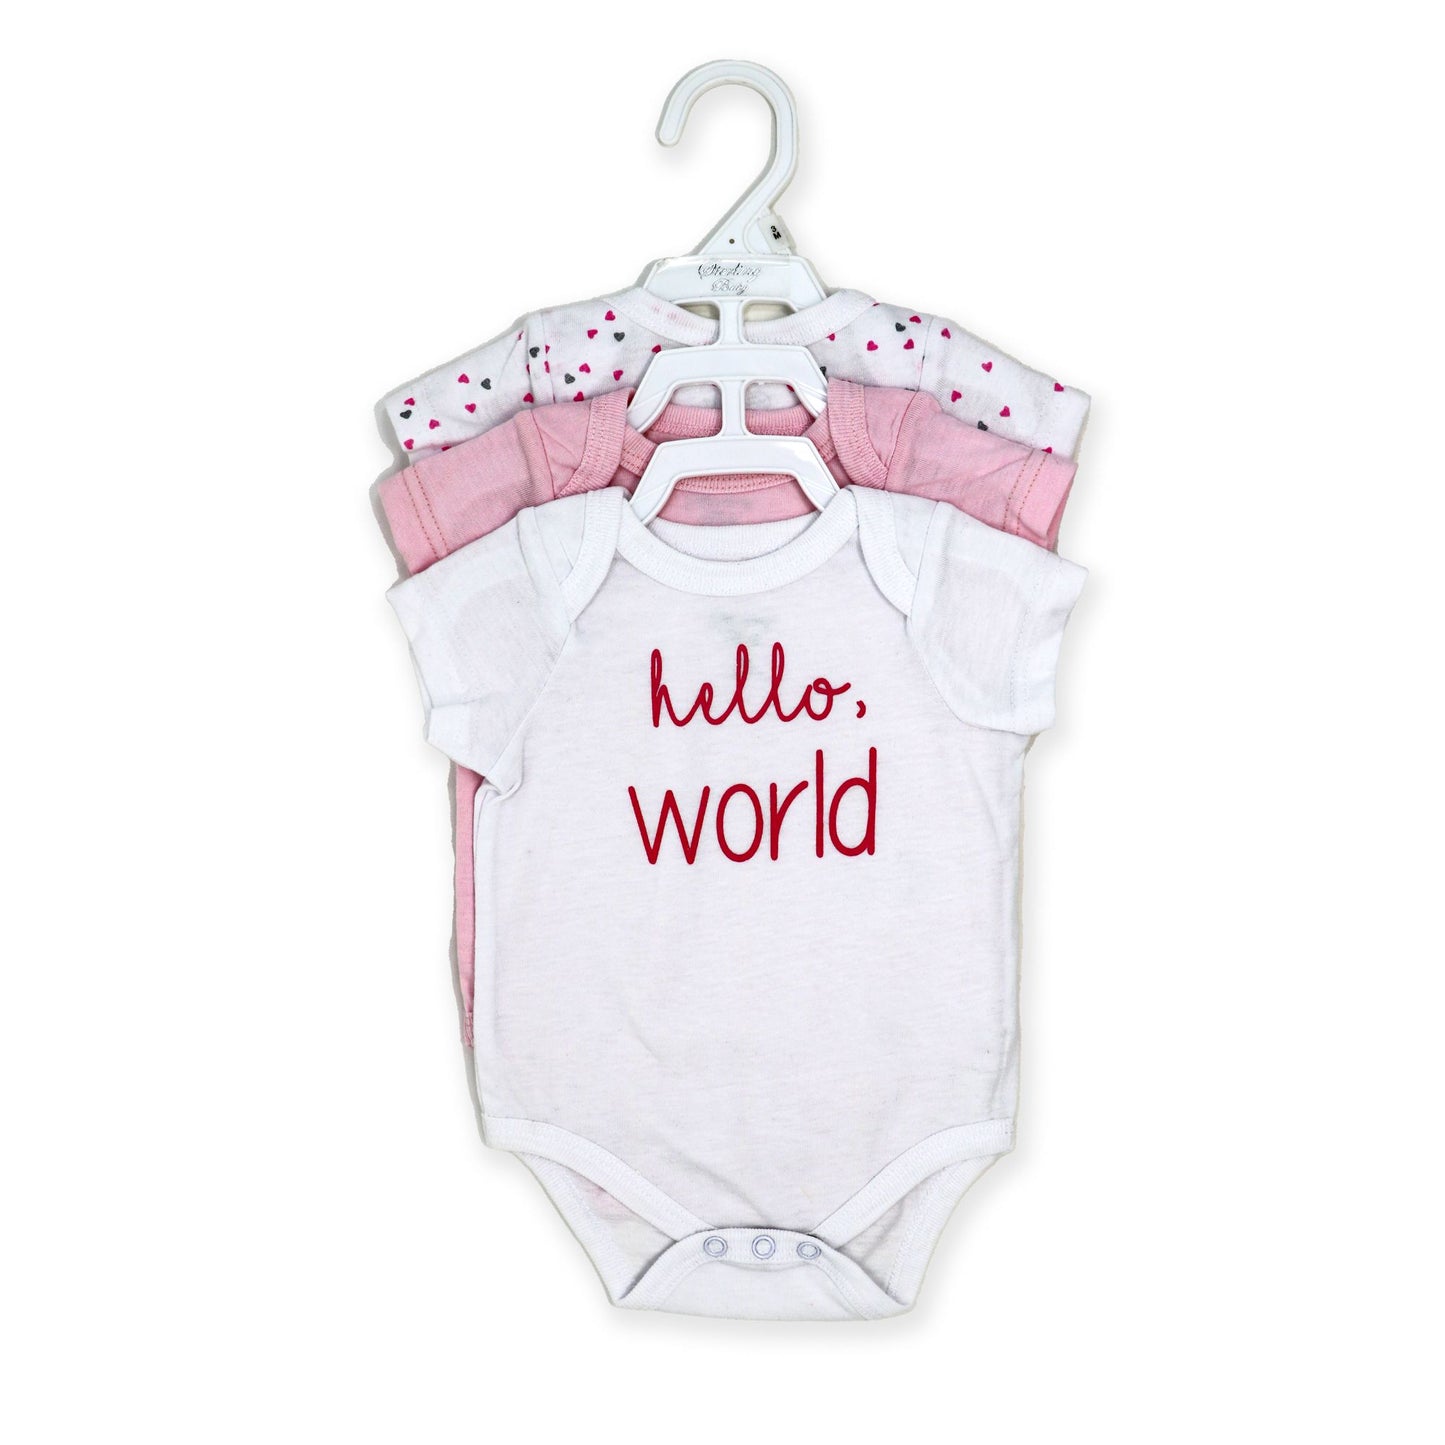 Baby Girl's Bodysuit Set - Hello World